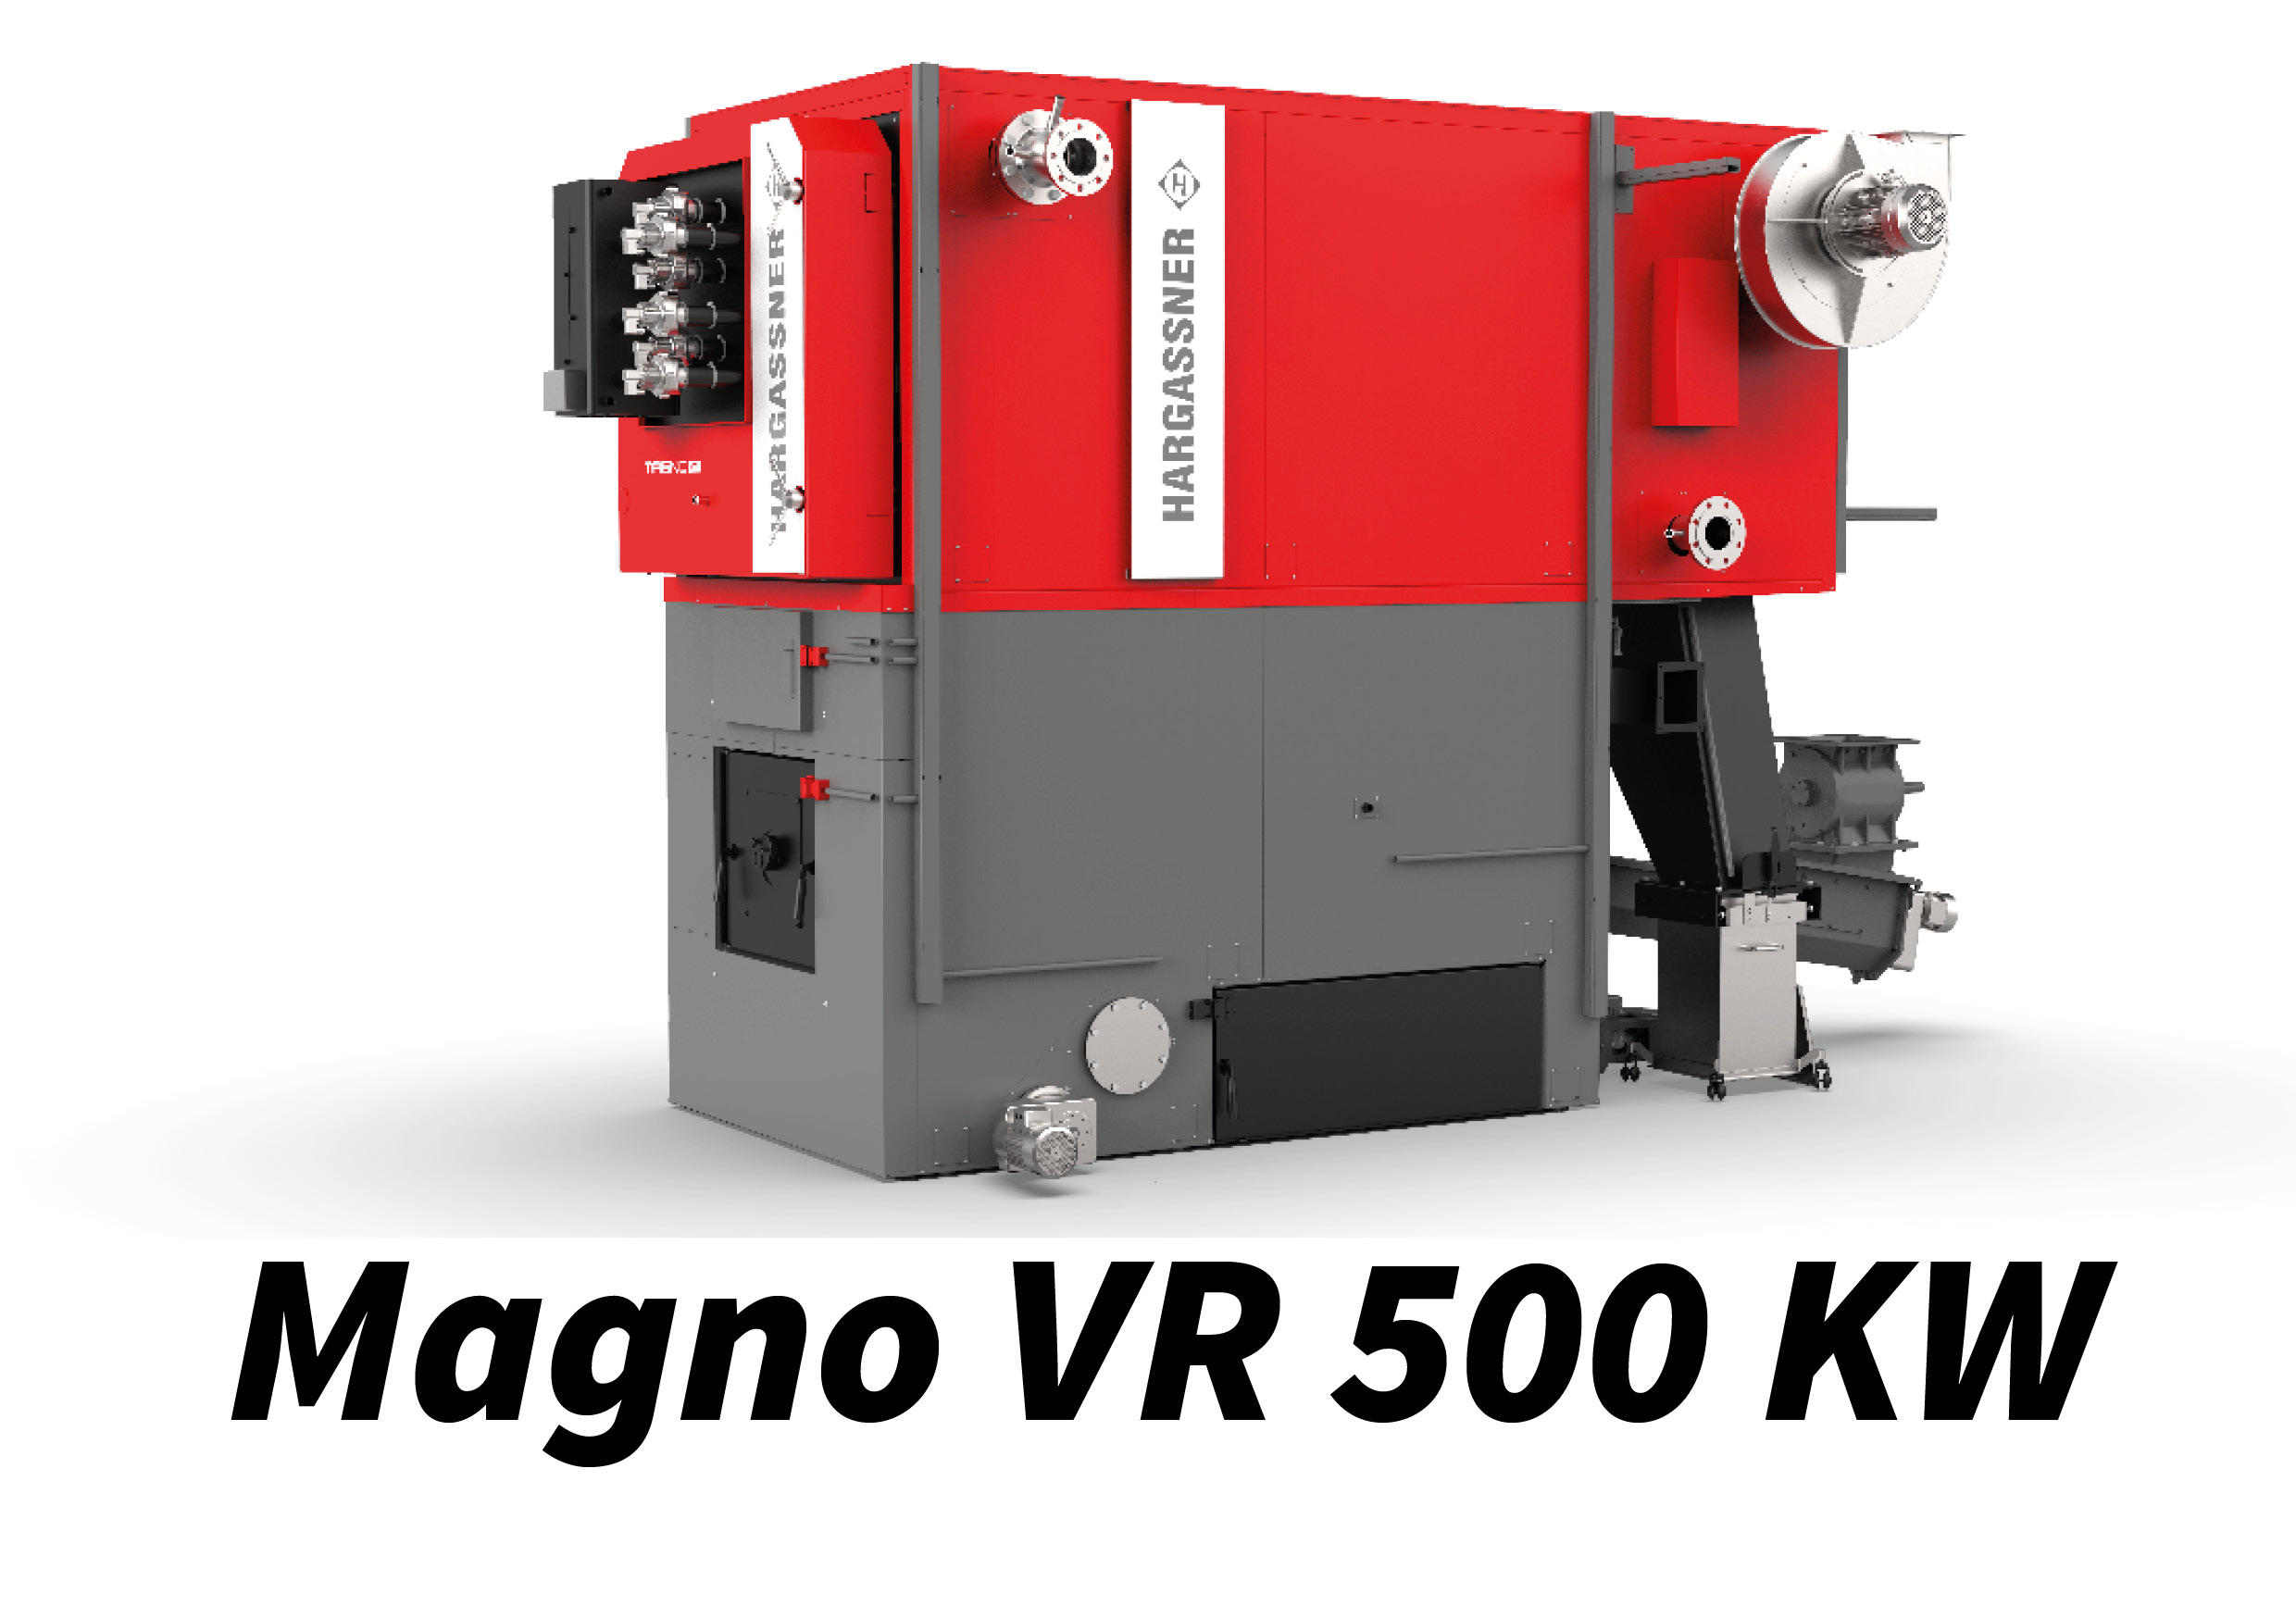 Magno VR 500 kW